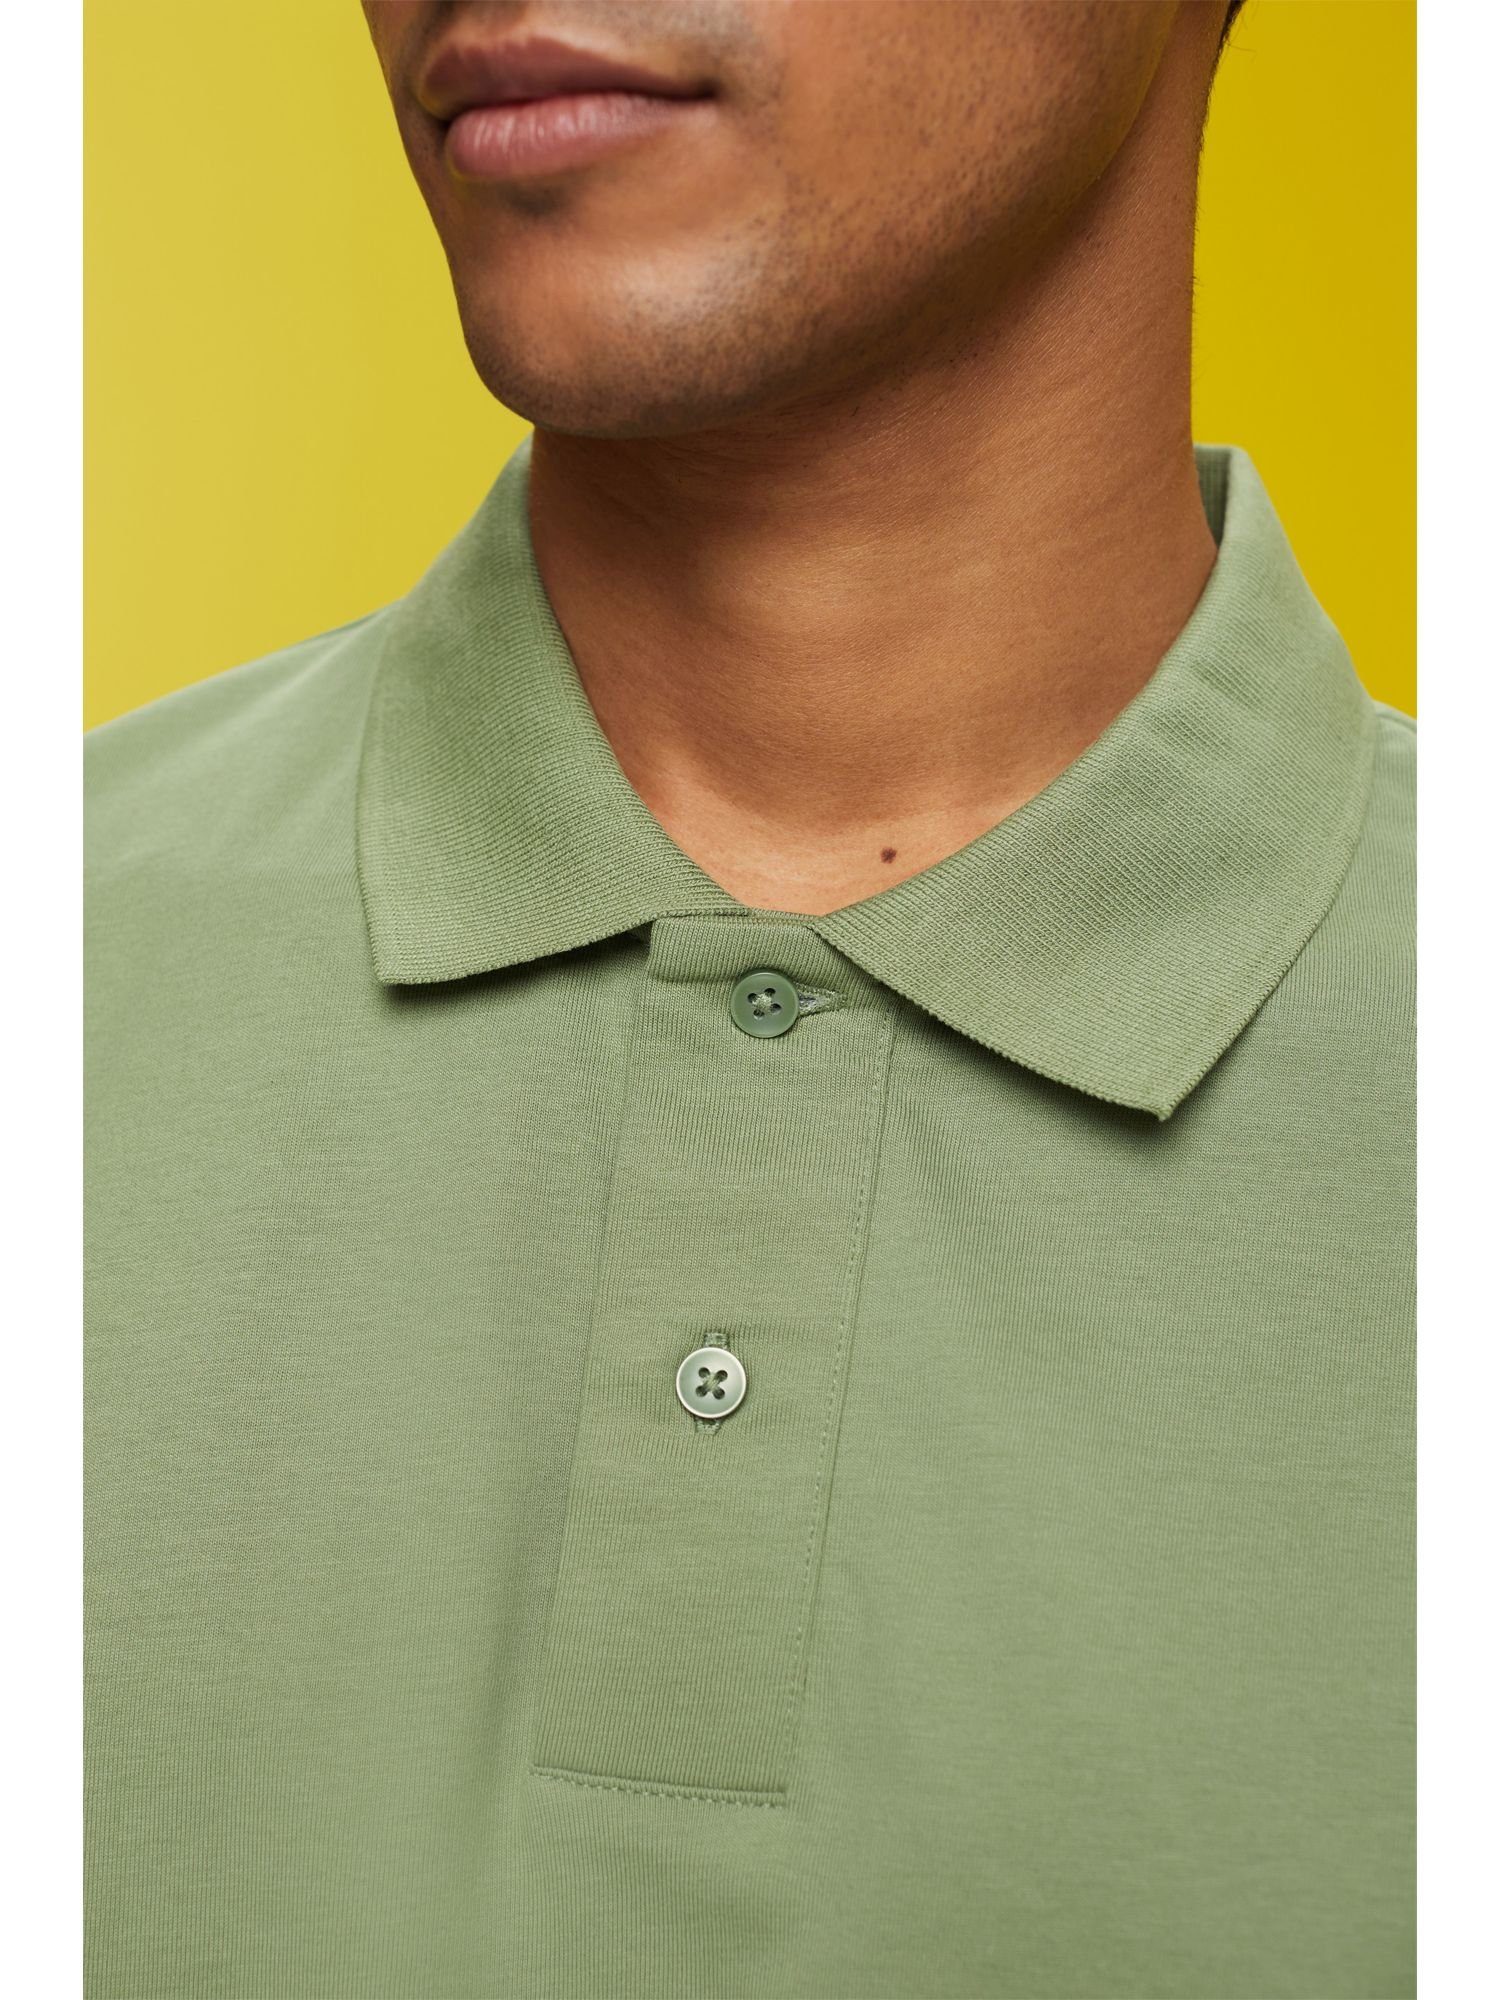 % Baumwolle Esprit KHAKI by PALE Jersey, Poloshirt 100 edc Poloshirt aus